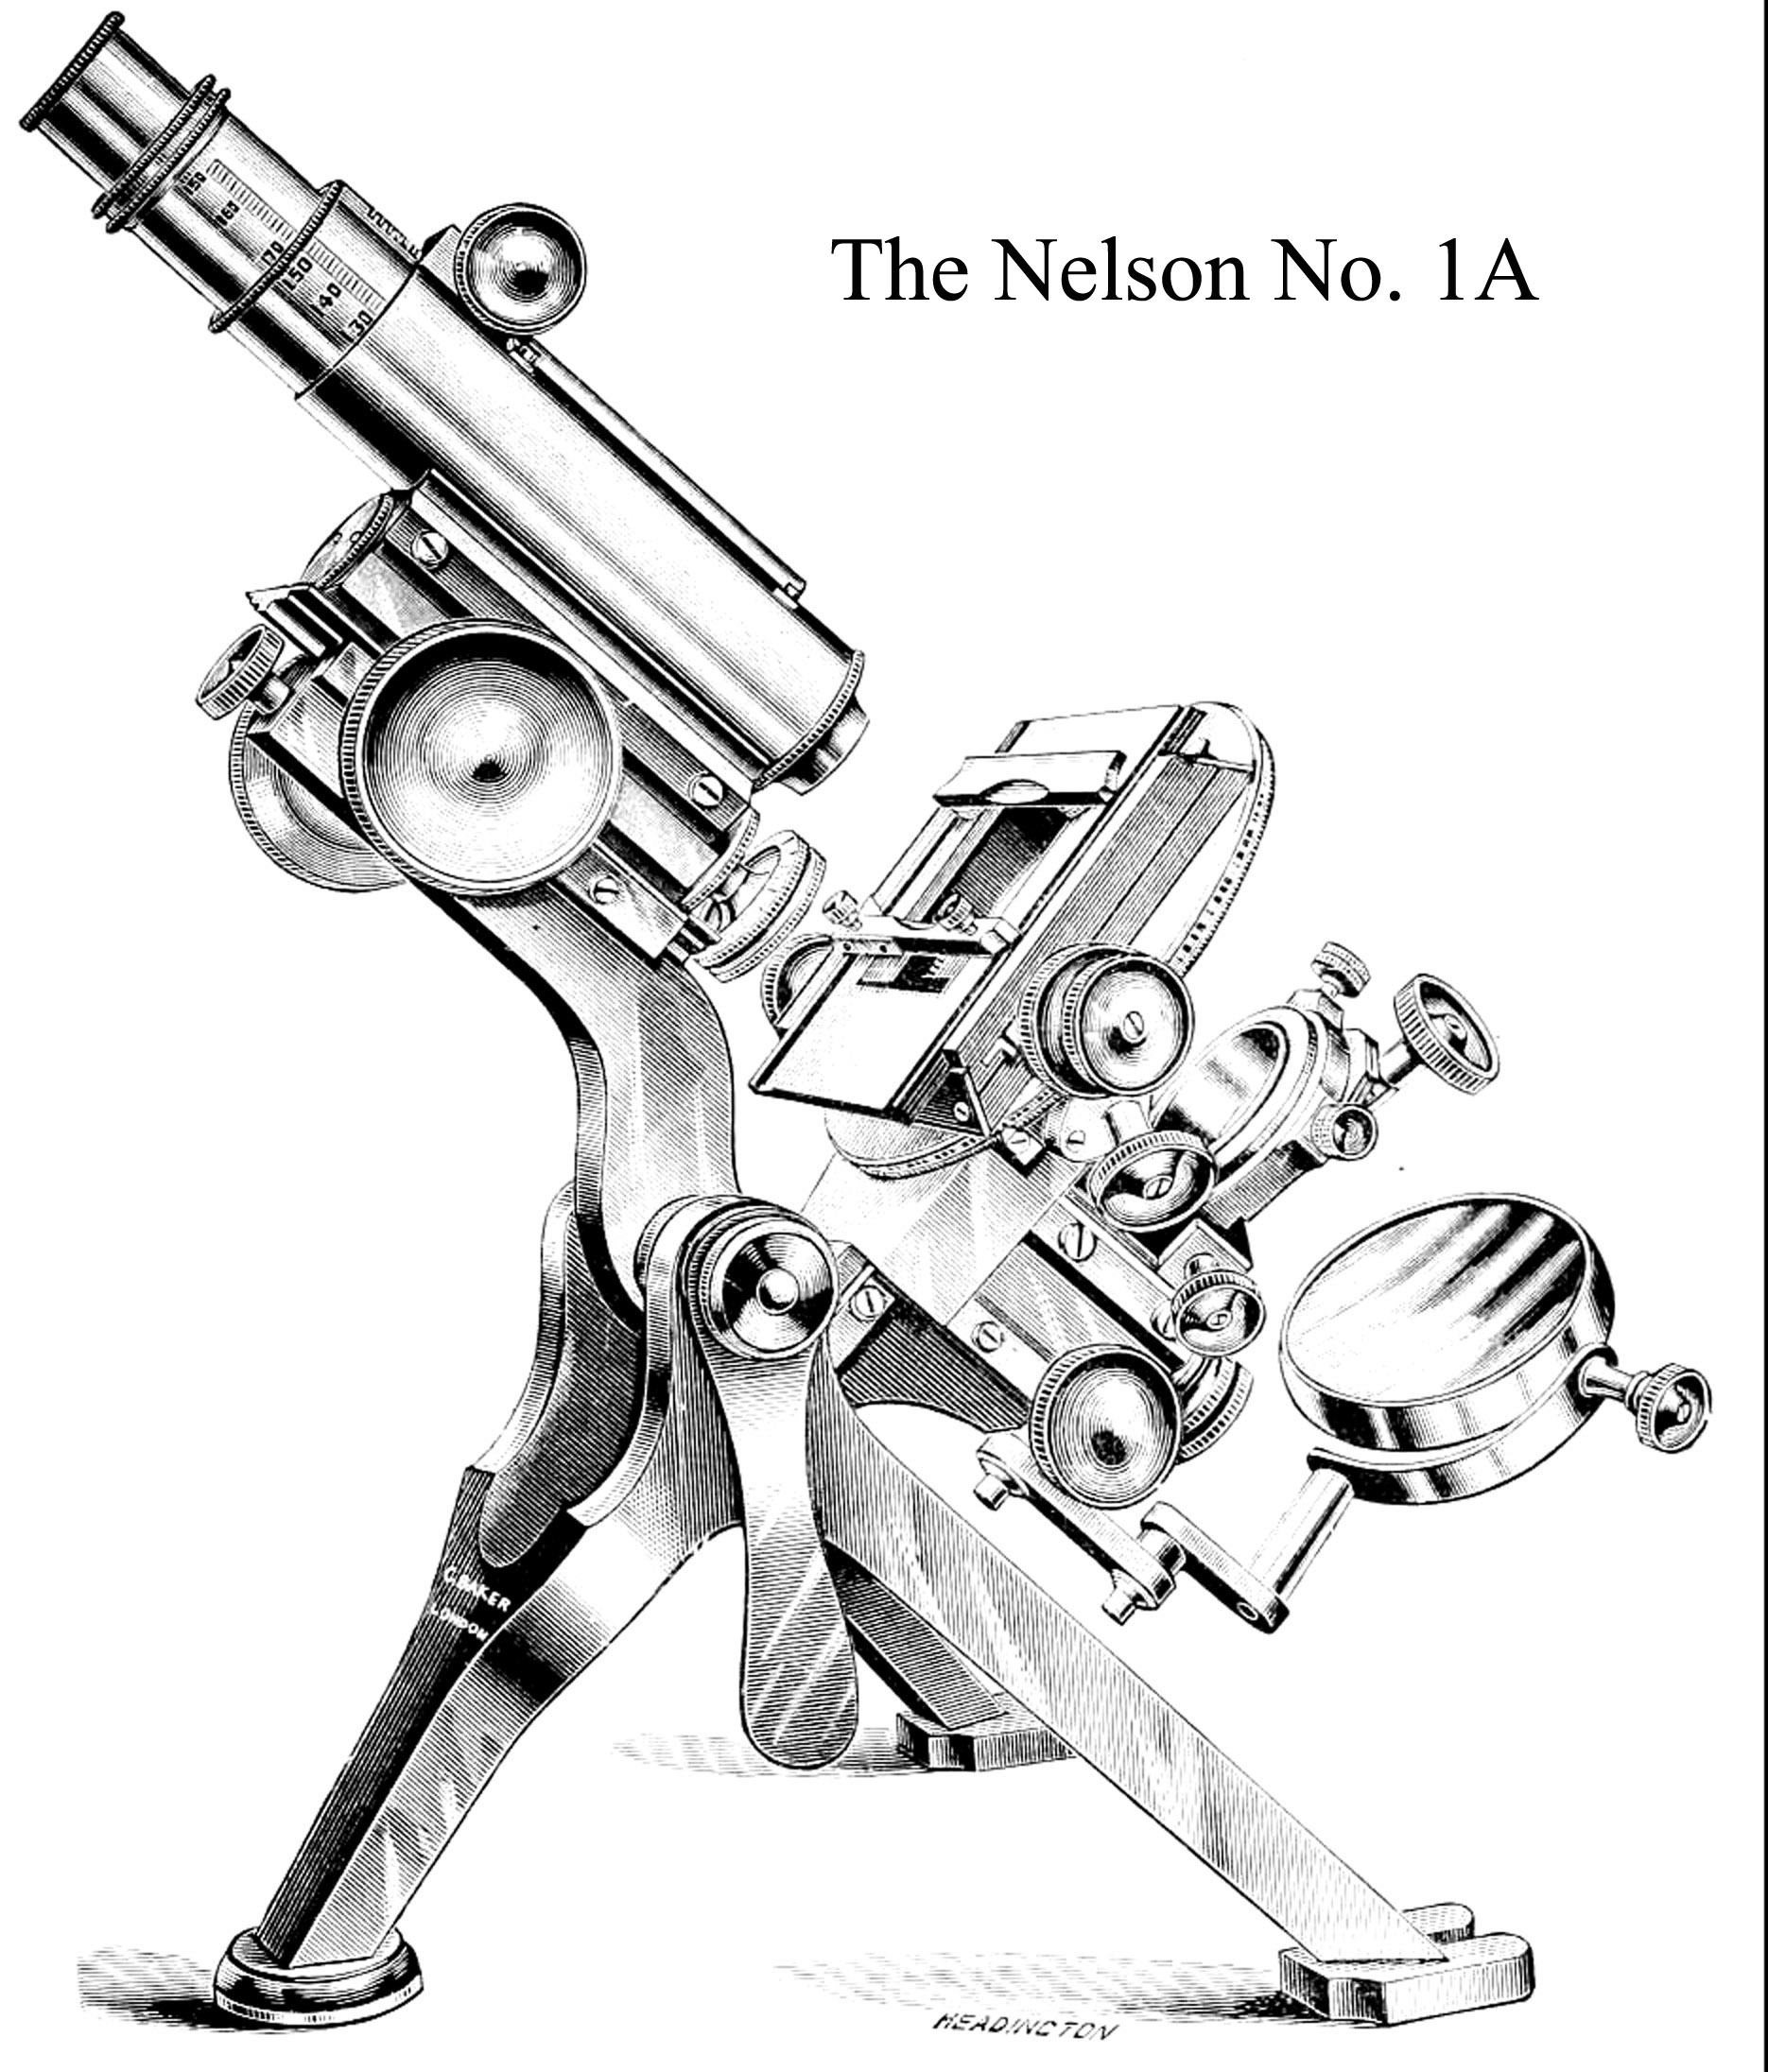 Catalog engraving of Nelson microscope